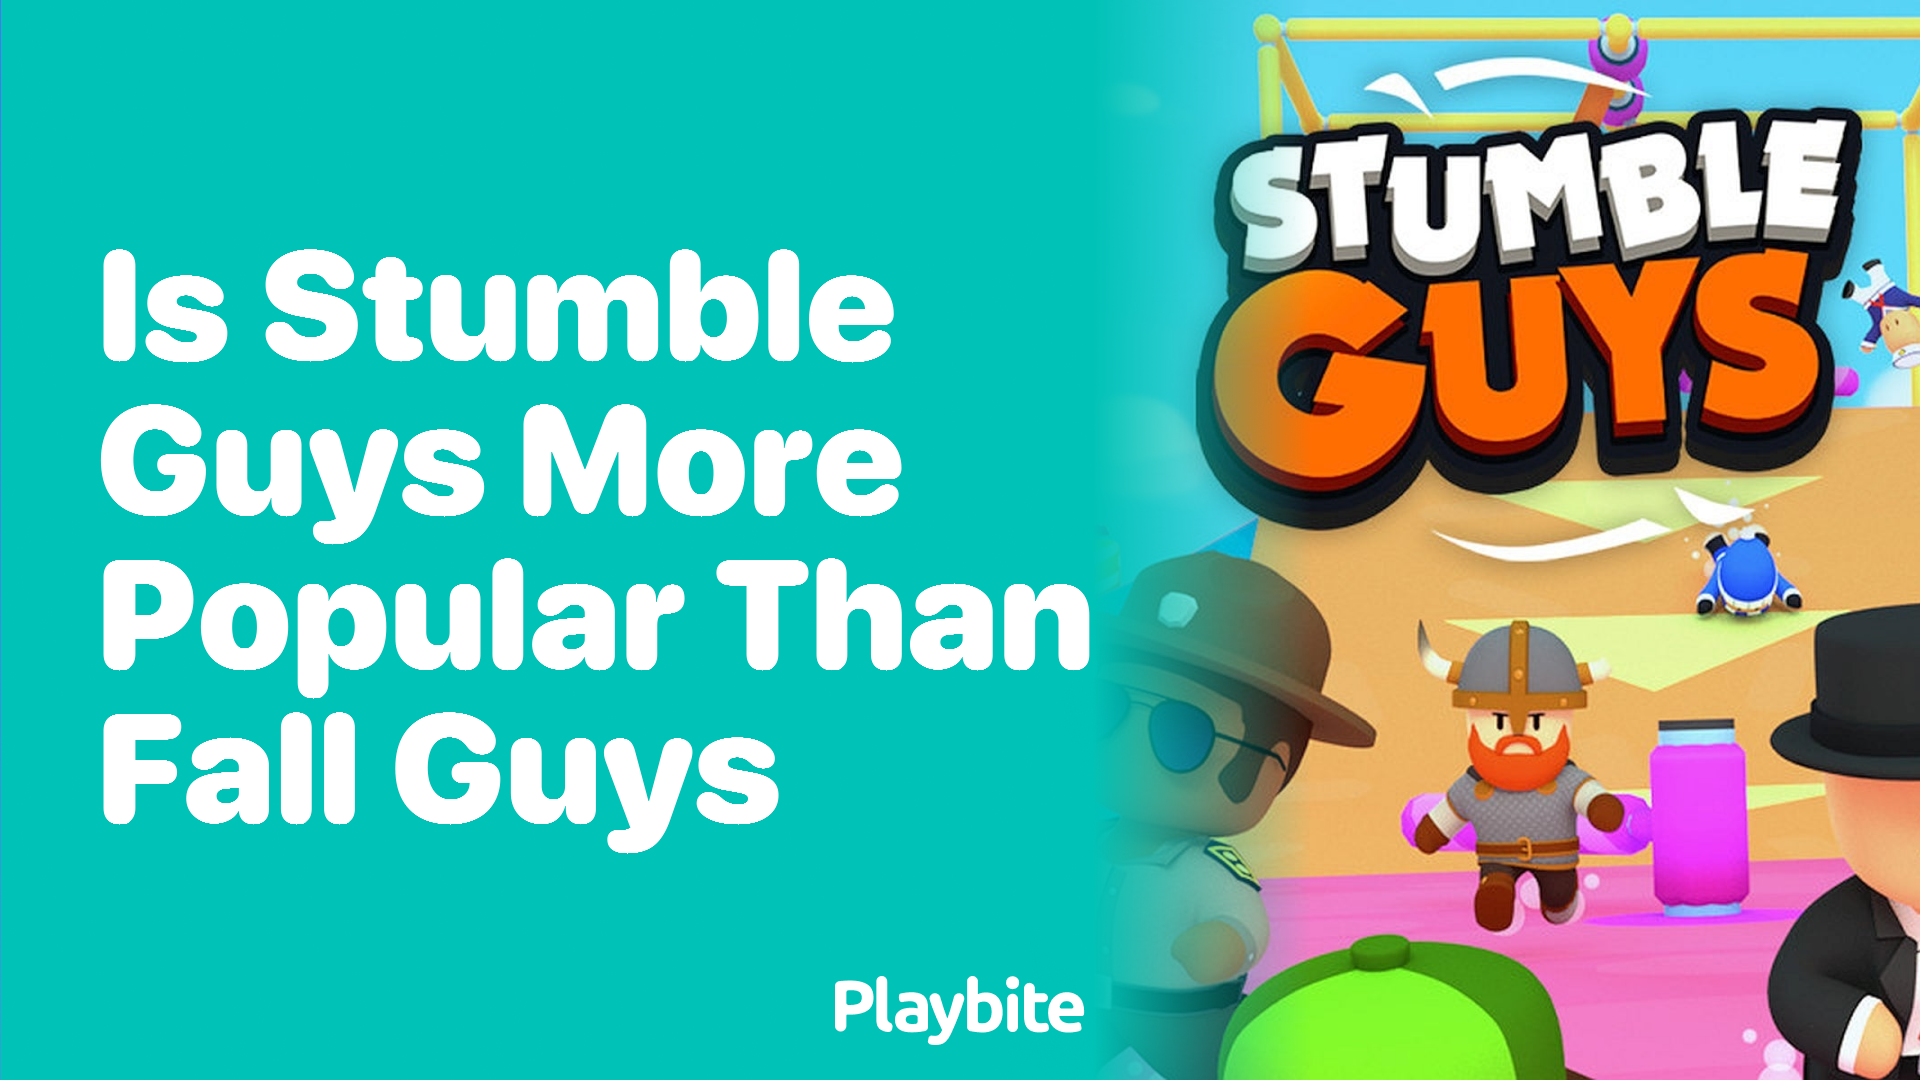 Is Stumble Guys More Popular Than Fall Guys?